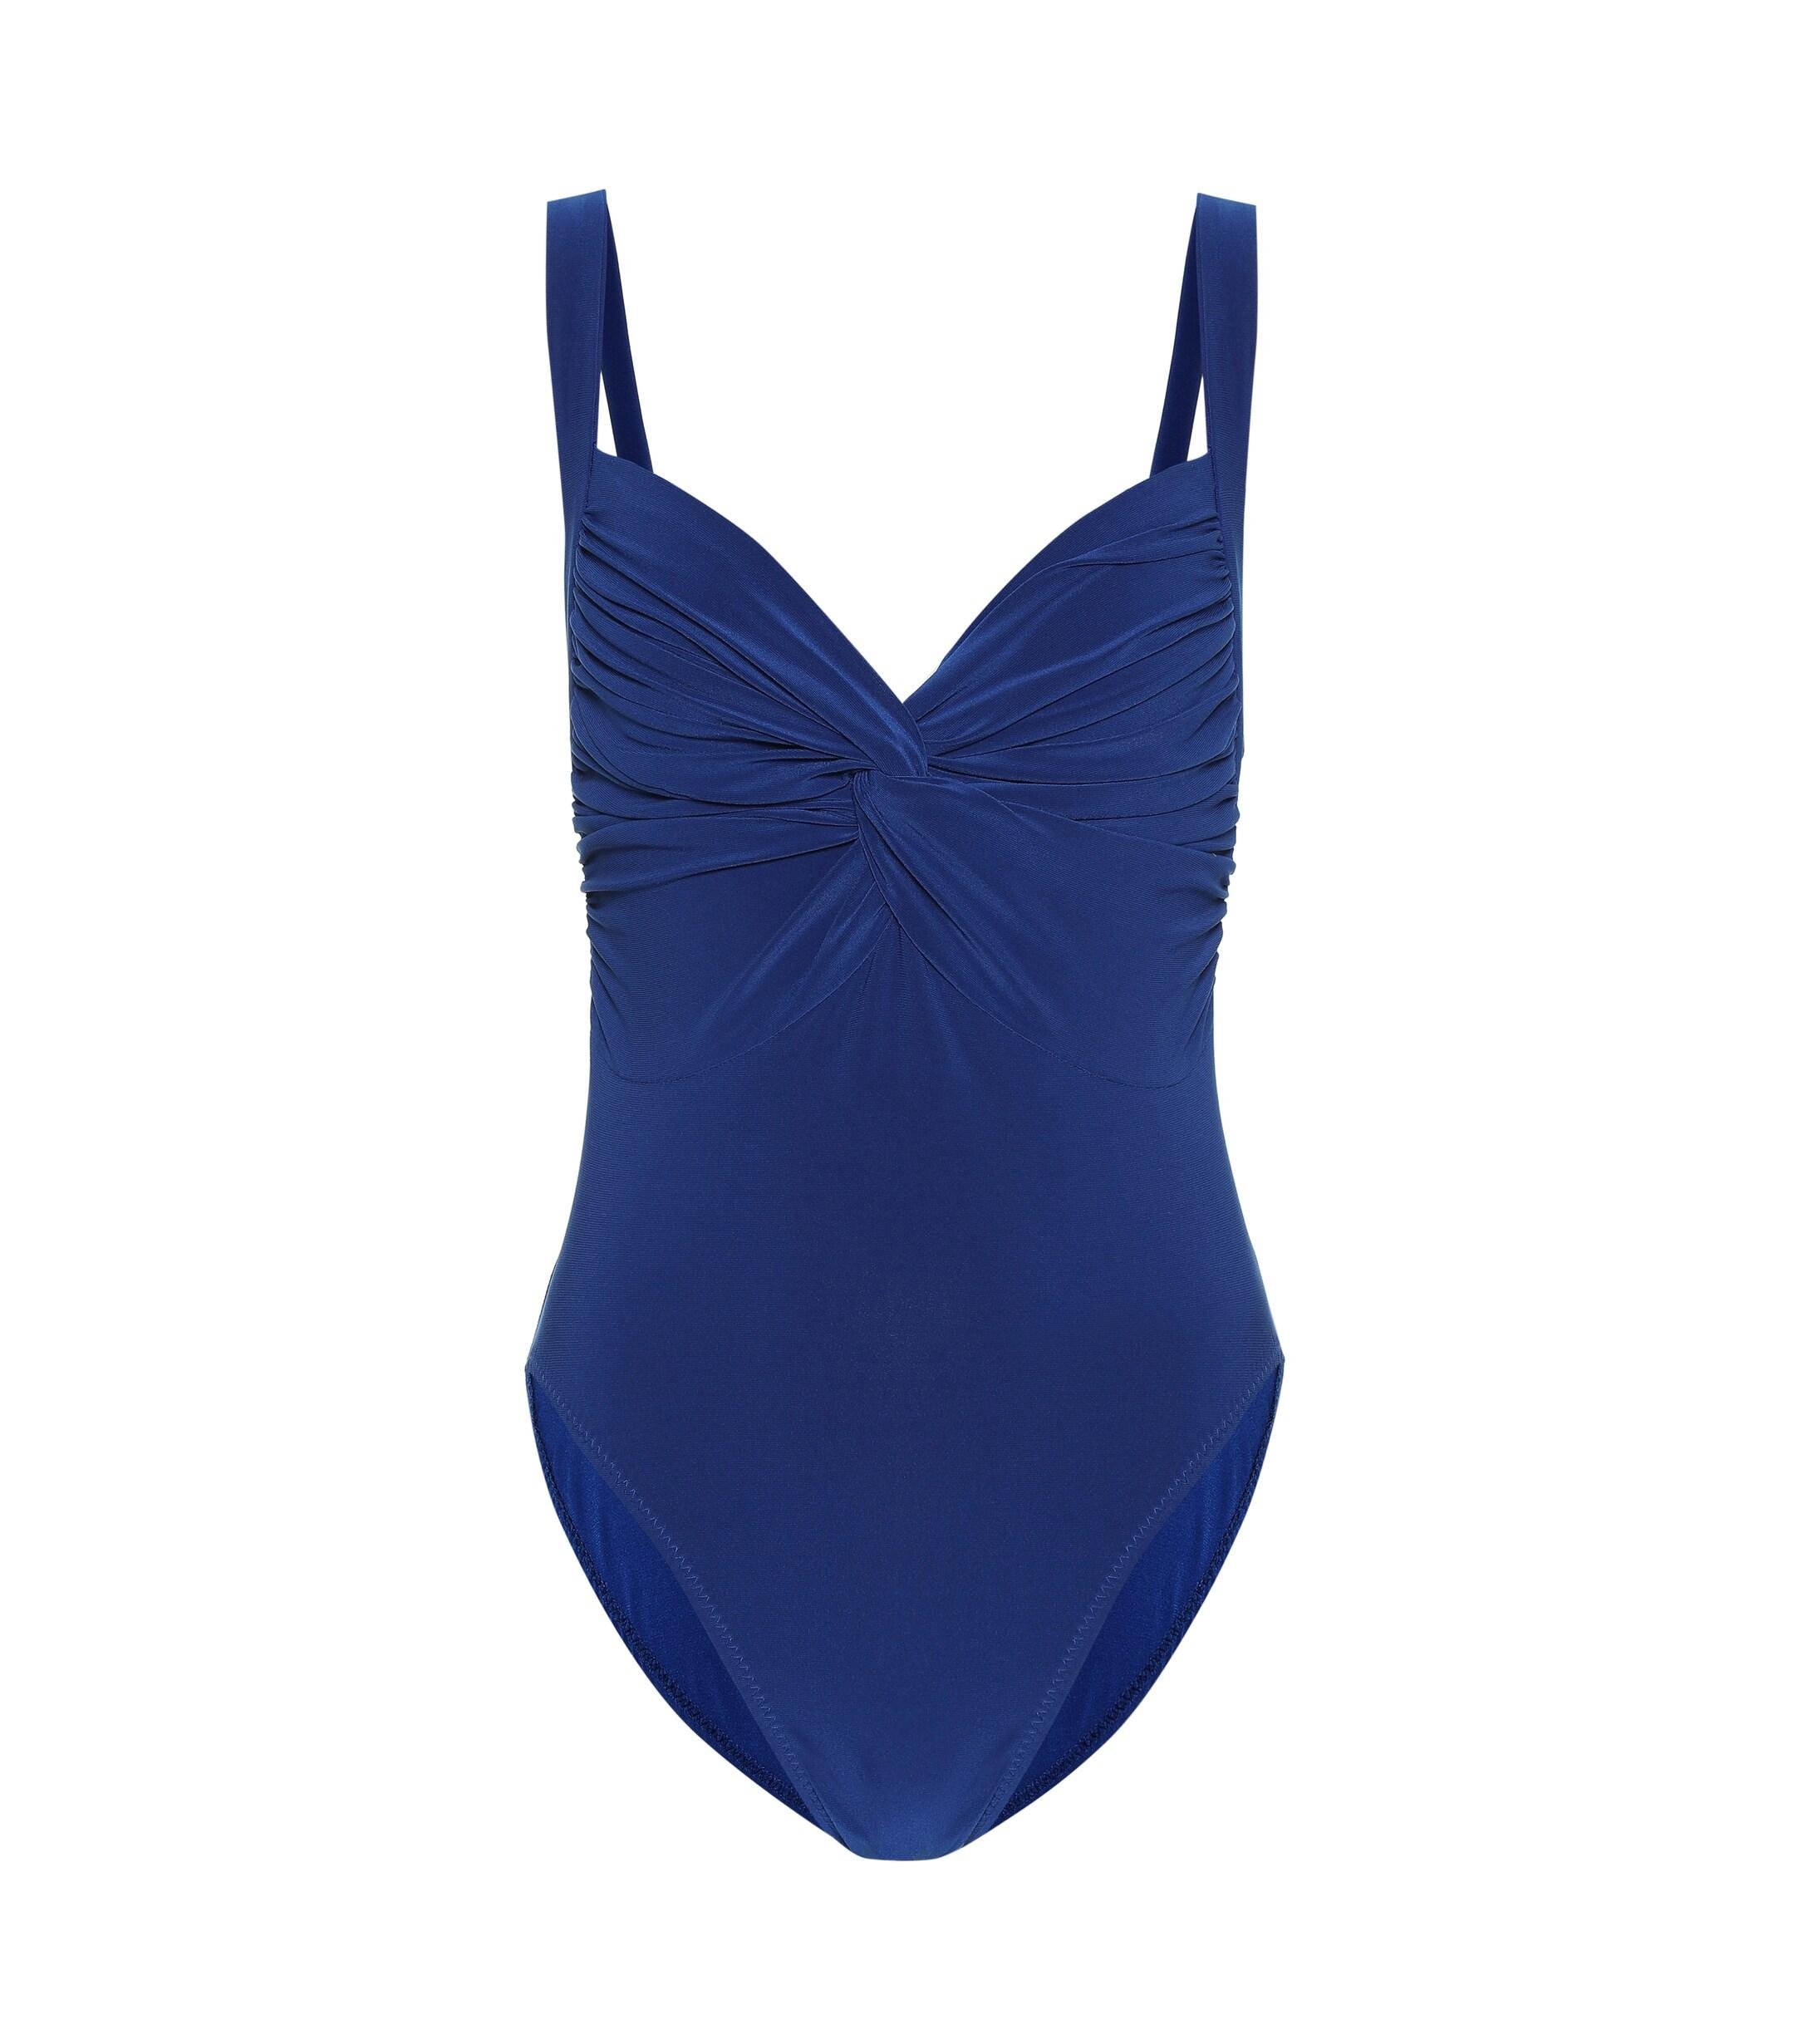 Norma Kamali Twist Mio One-piece Swimsuit in Blue - Lyst